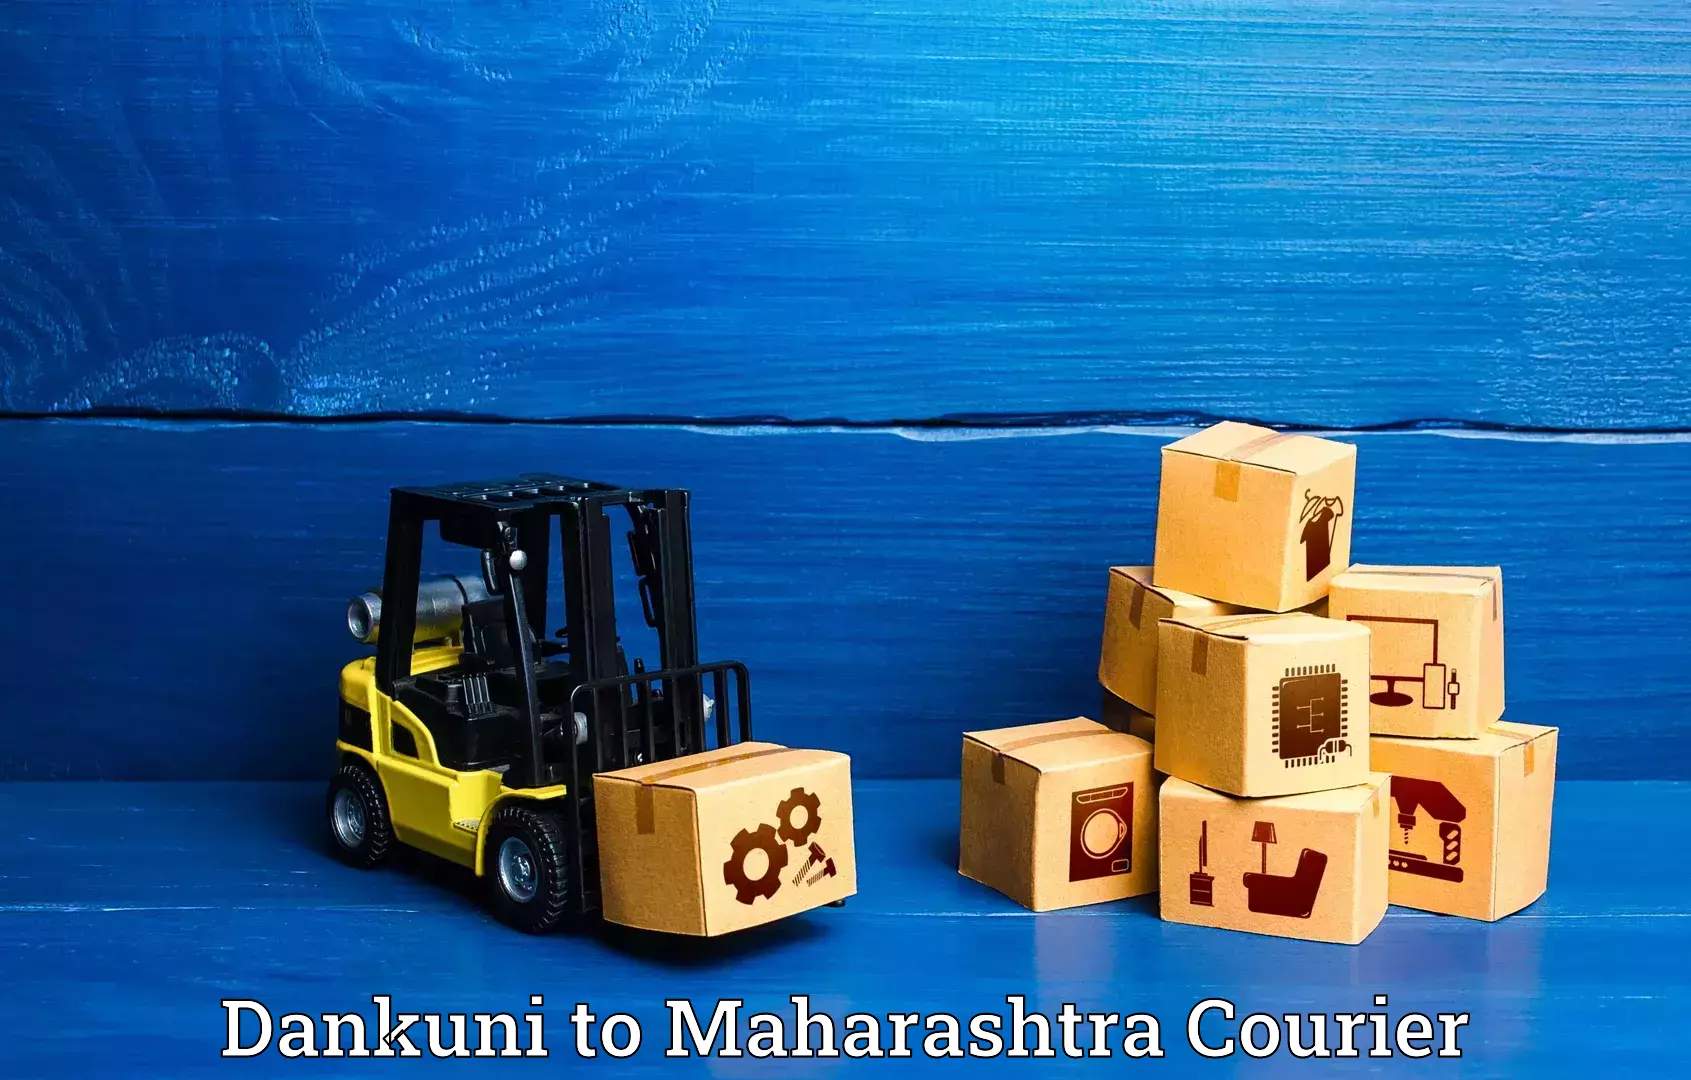 Luggage delivery app Dankuni to Maharashtra